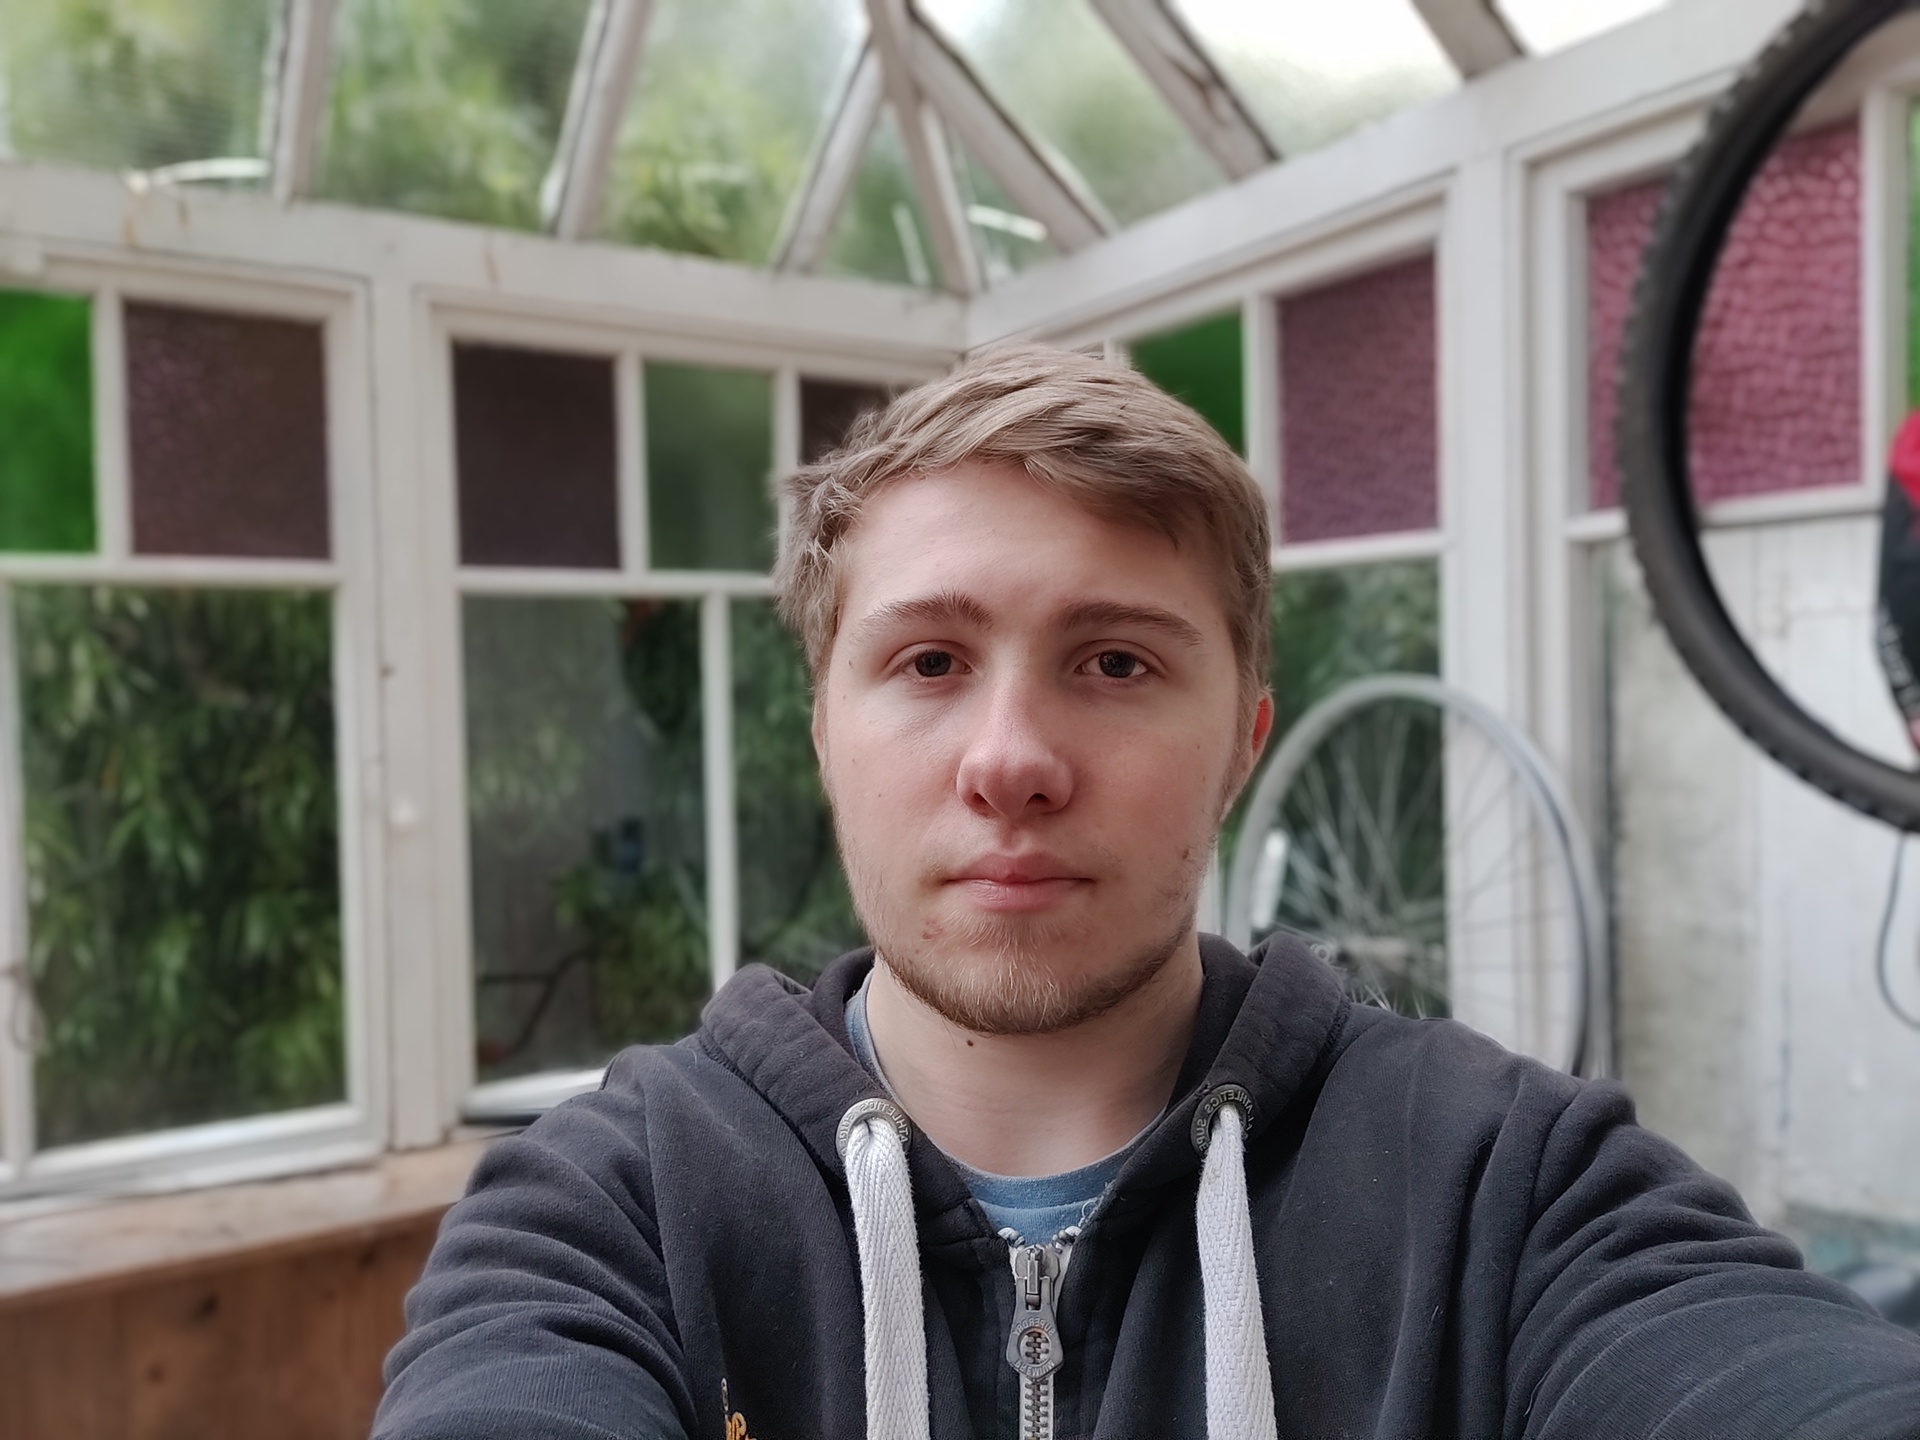 OnePlus 7T Pro Camera Sample Selfie test in a porch